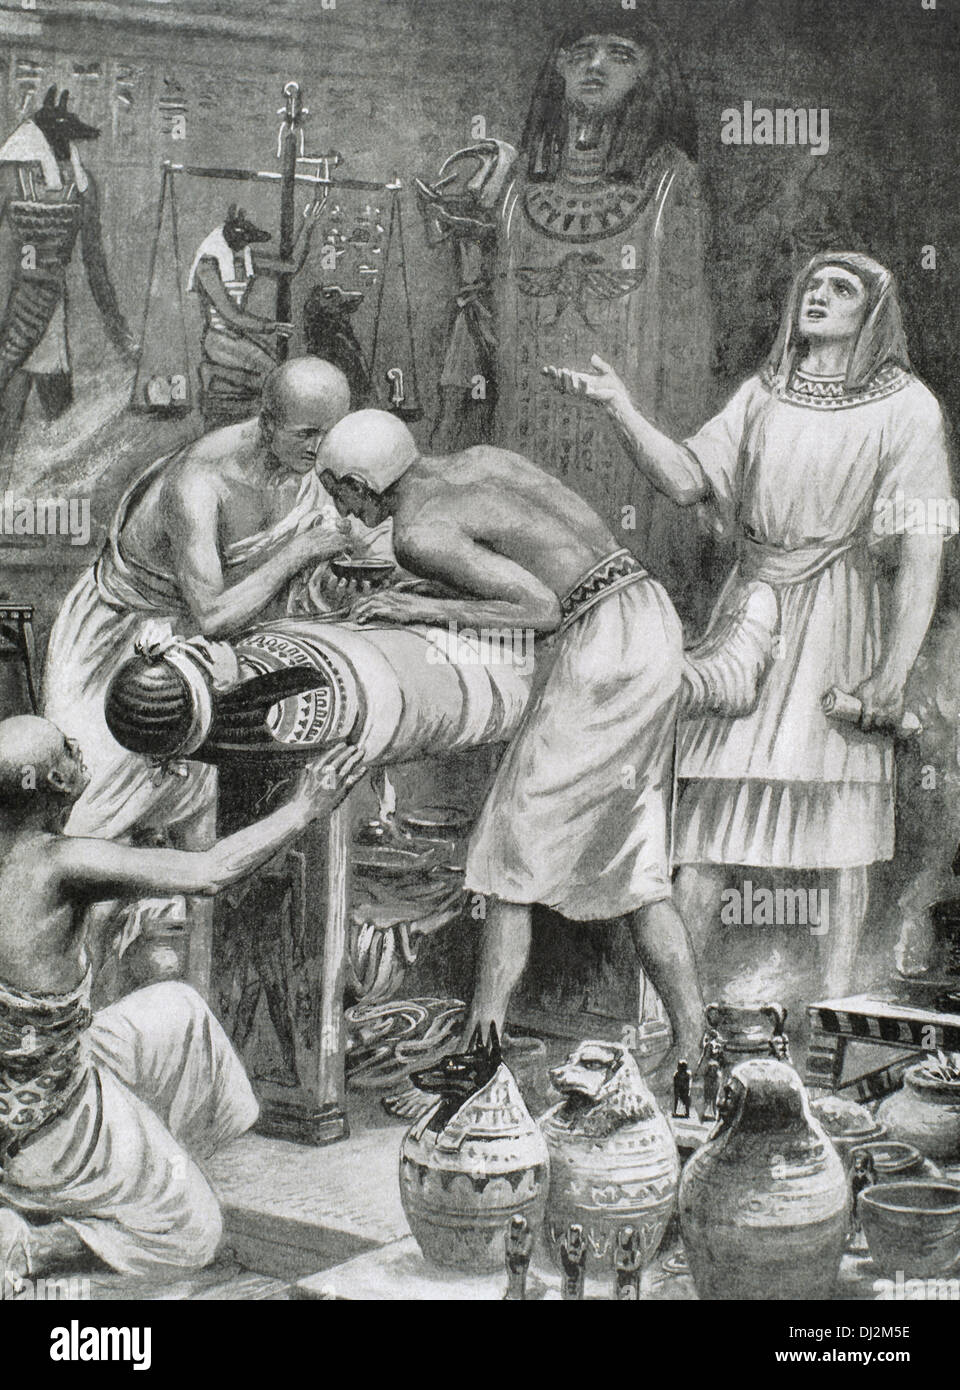 Mummification. Ancient Egypt. Engraving. 19th century. Stock Photo